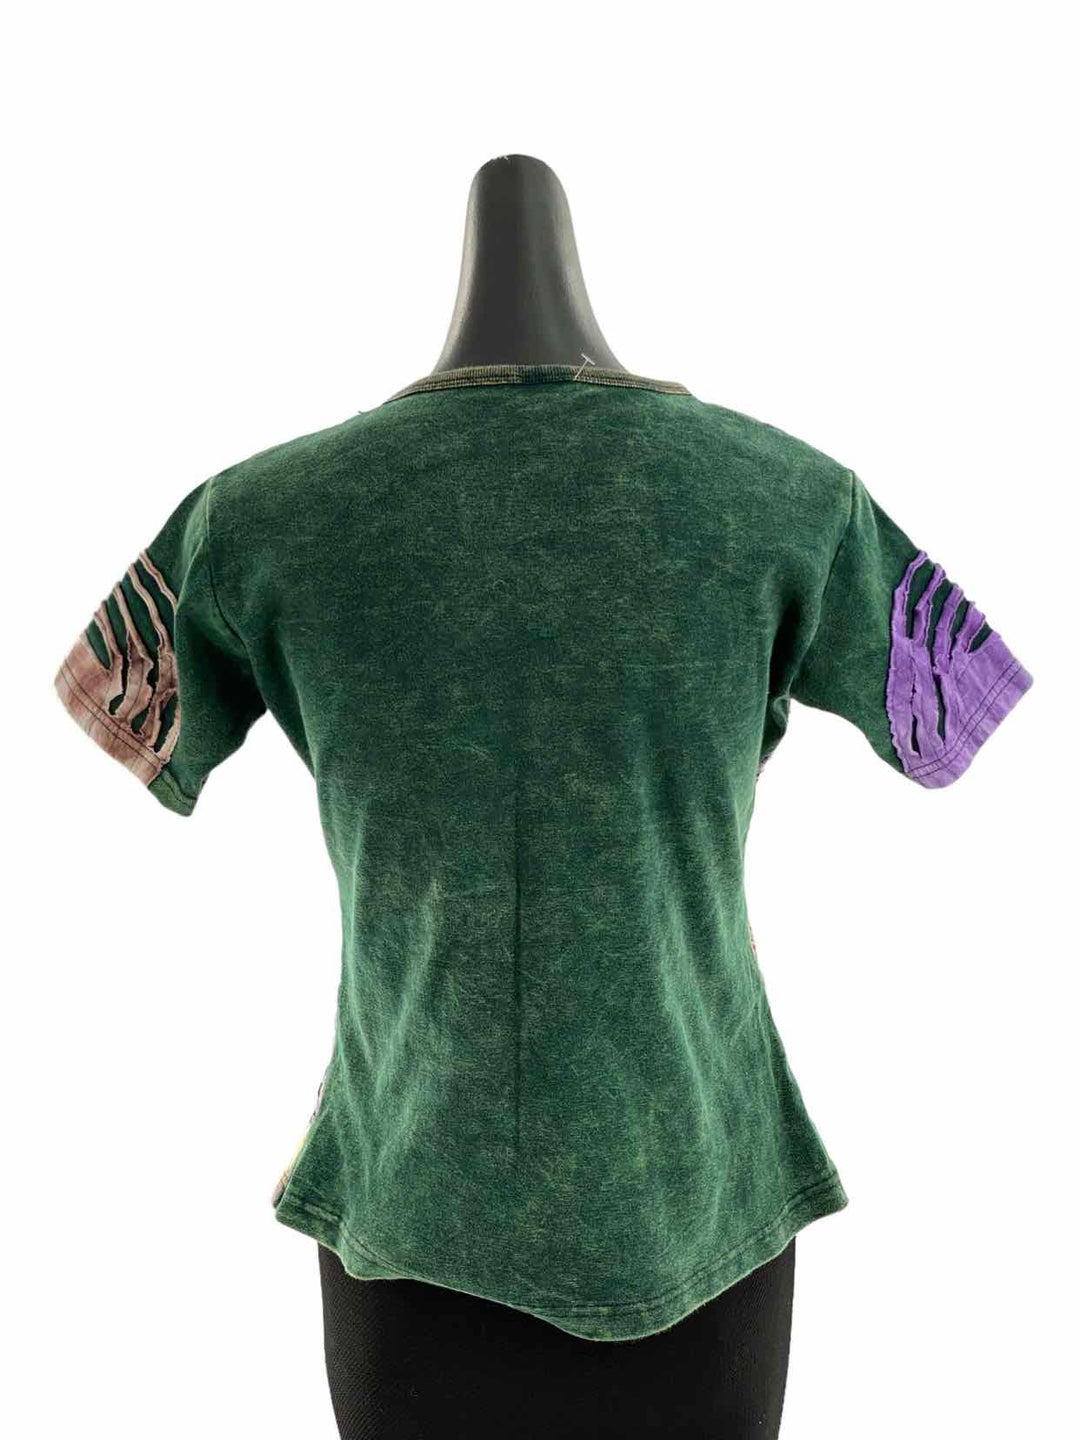 Unknown Brand Size S/M Green Stripe 100% cotton Short Sleeve Shirts